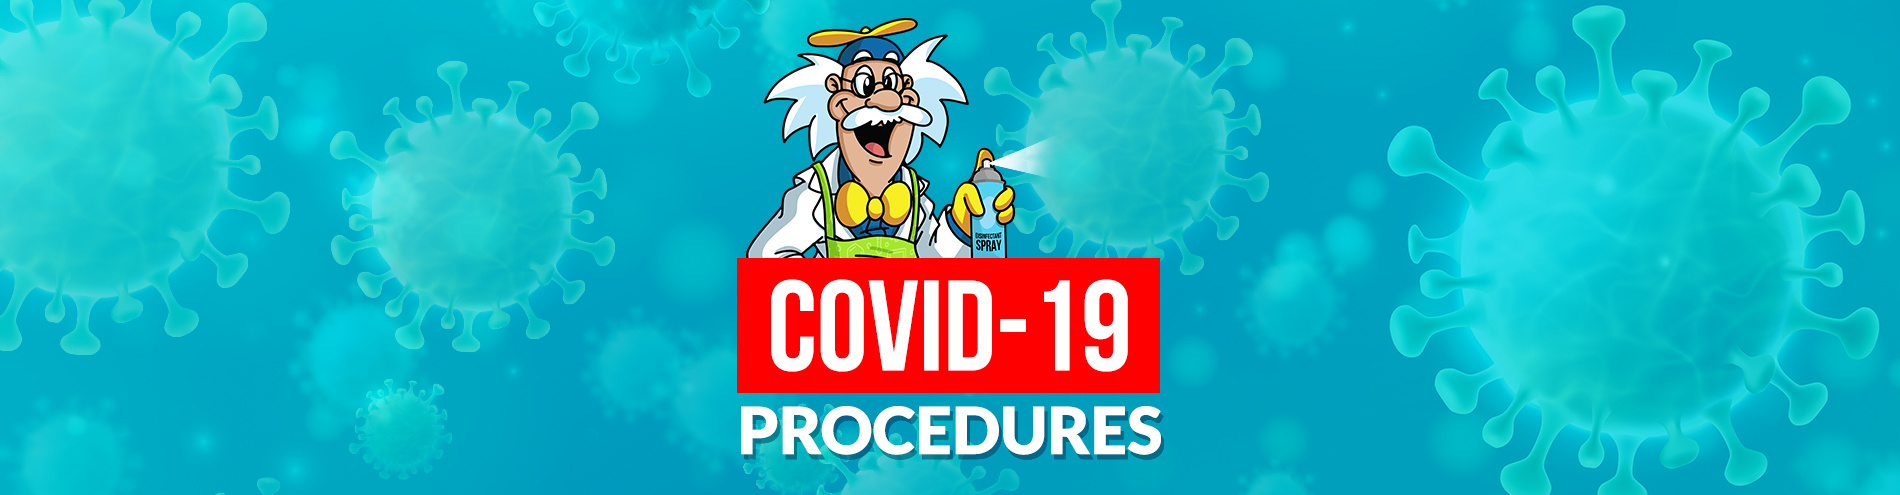 Covid 19 Procedures Header